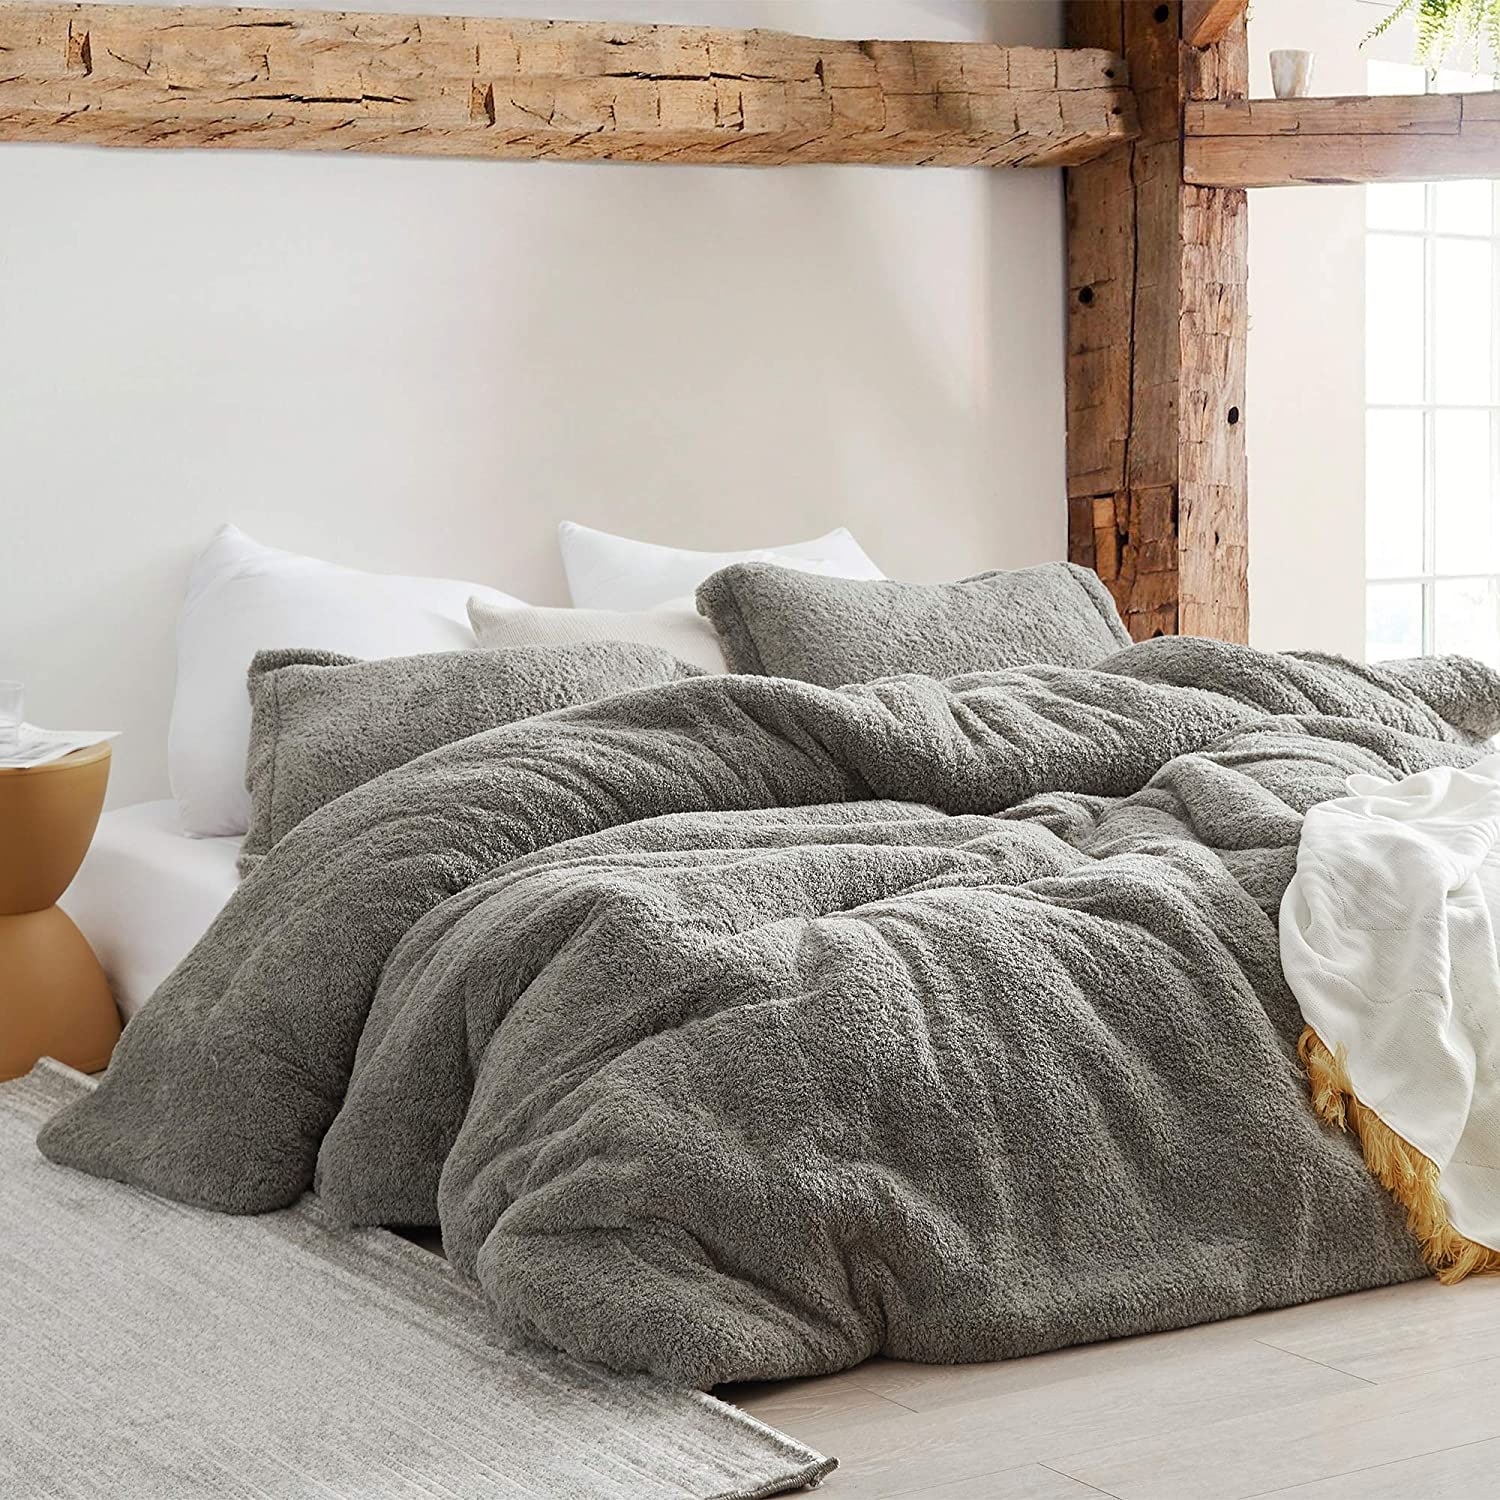 Sleepy Haven Coma Inducer Oversized Comforter London Fog Overstock 32181295